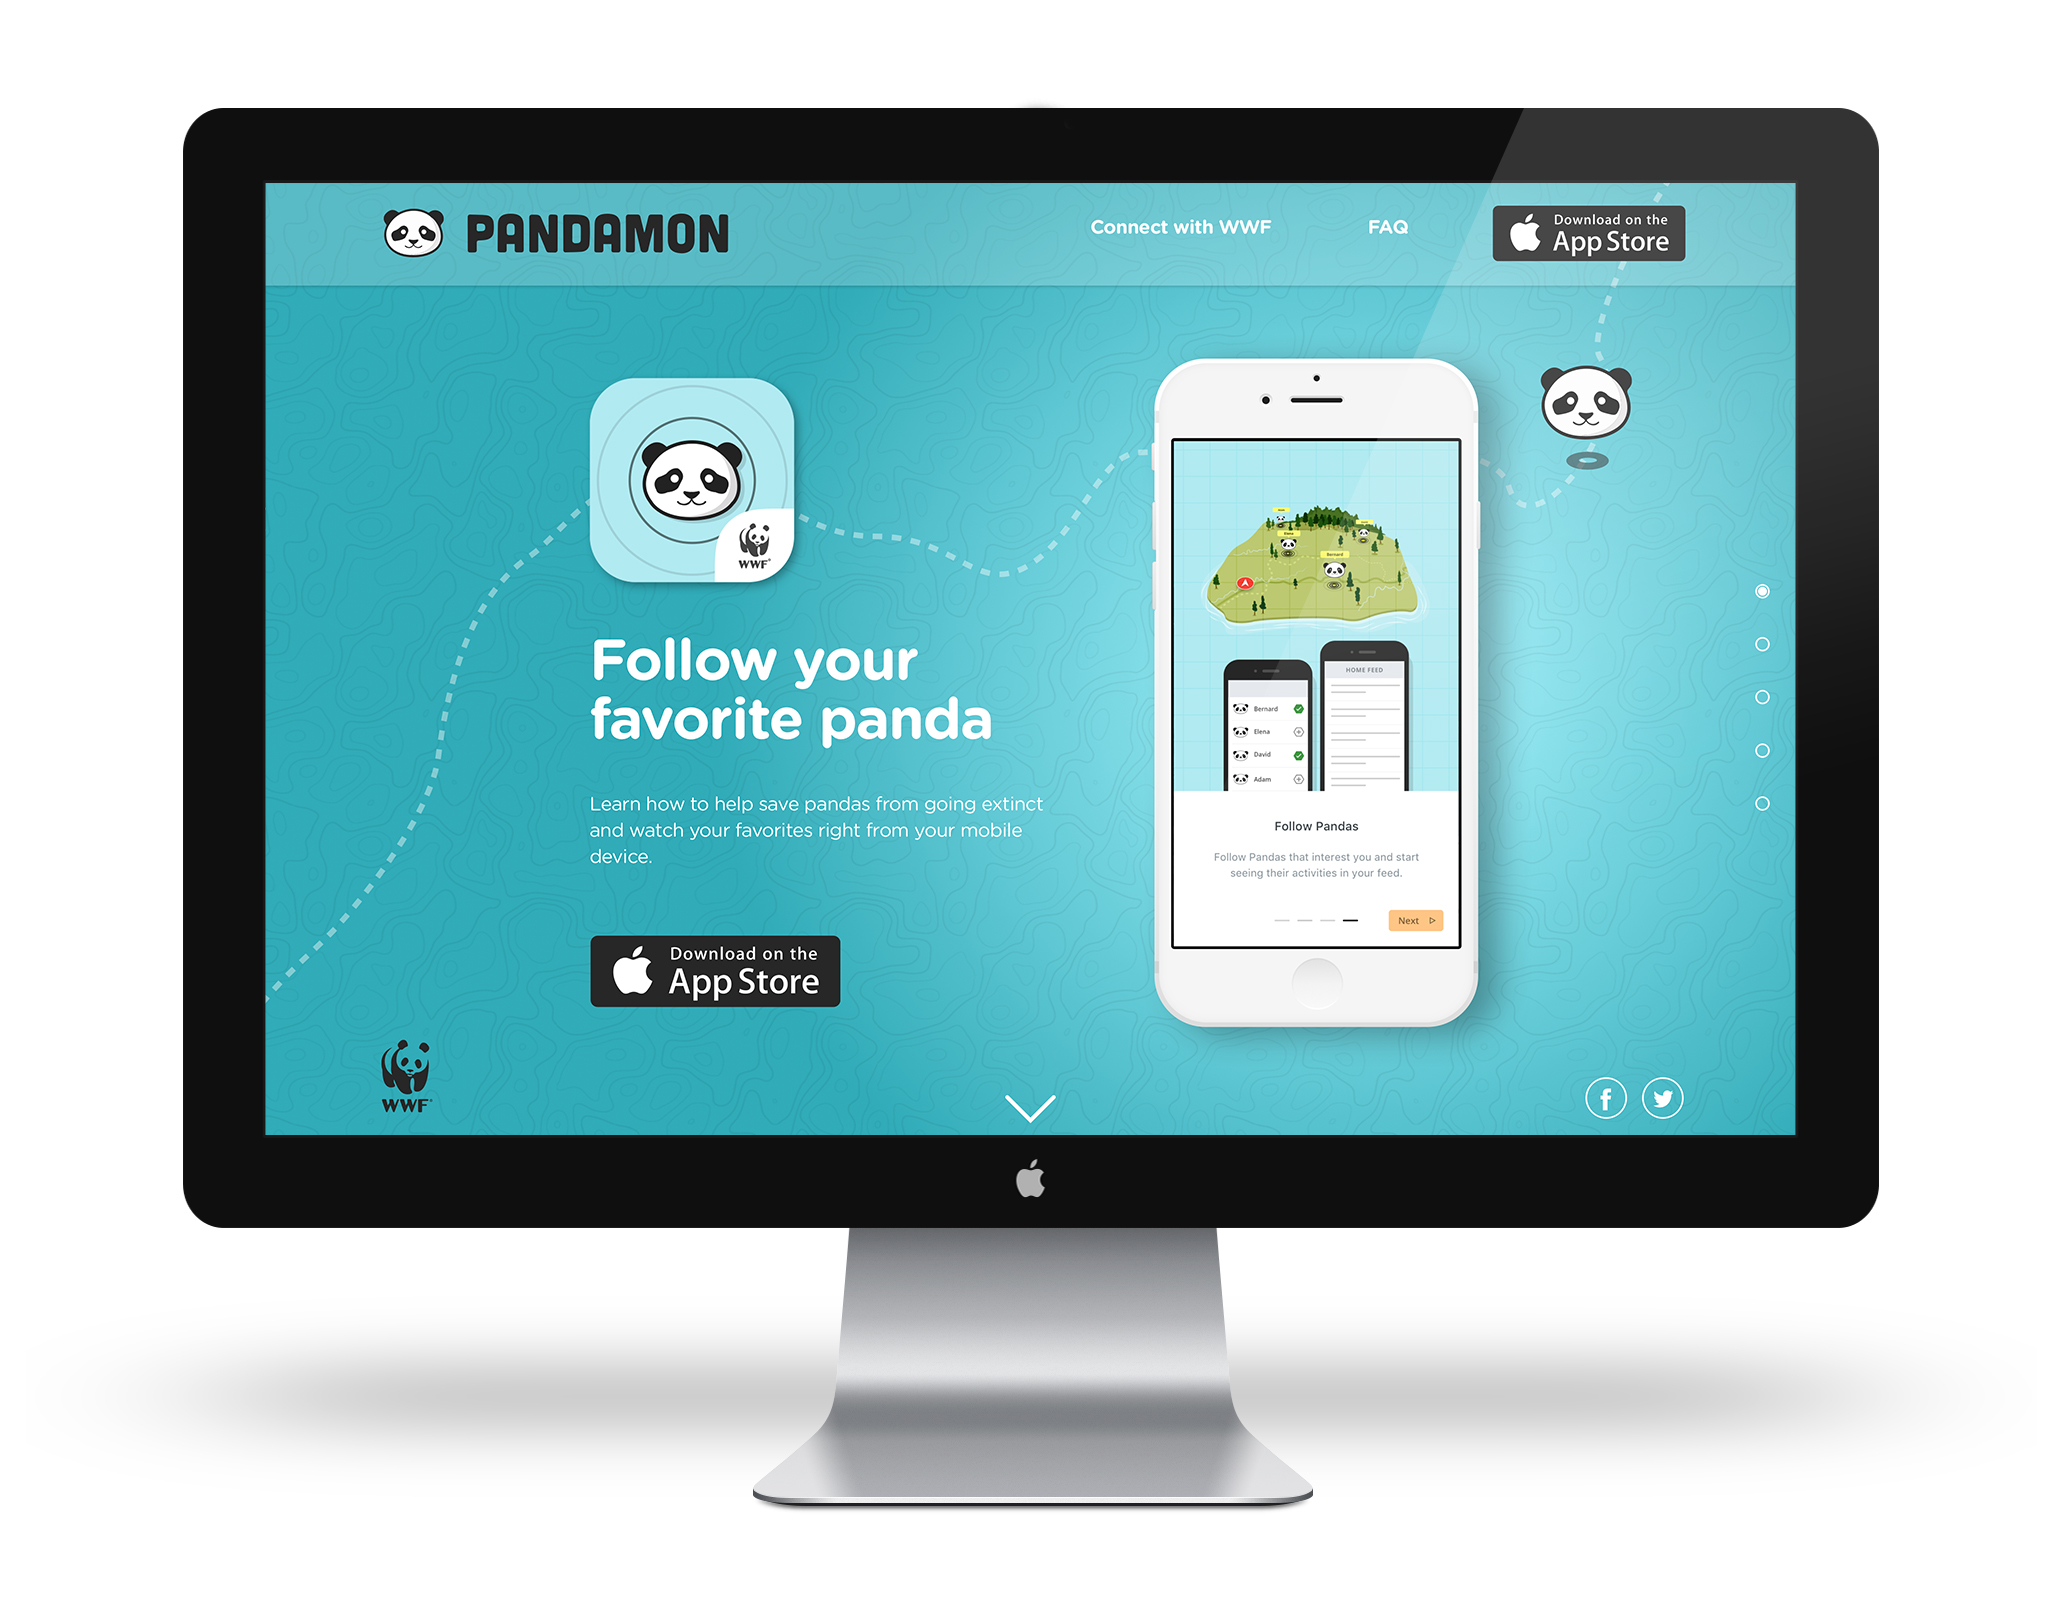 Pandamon-Website-on-Computer-Page1.jpg